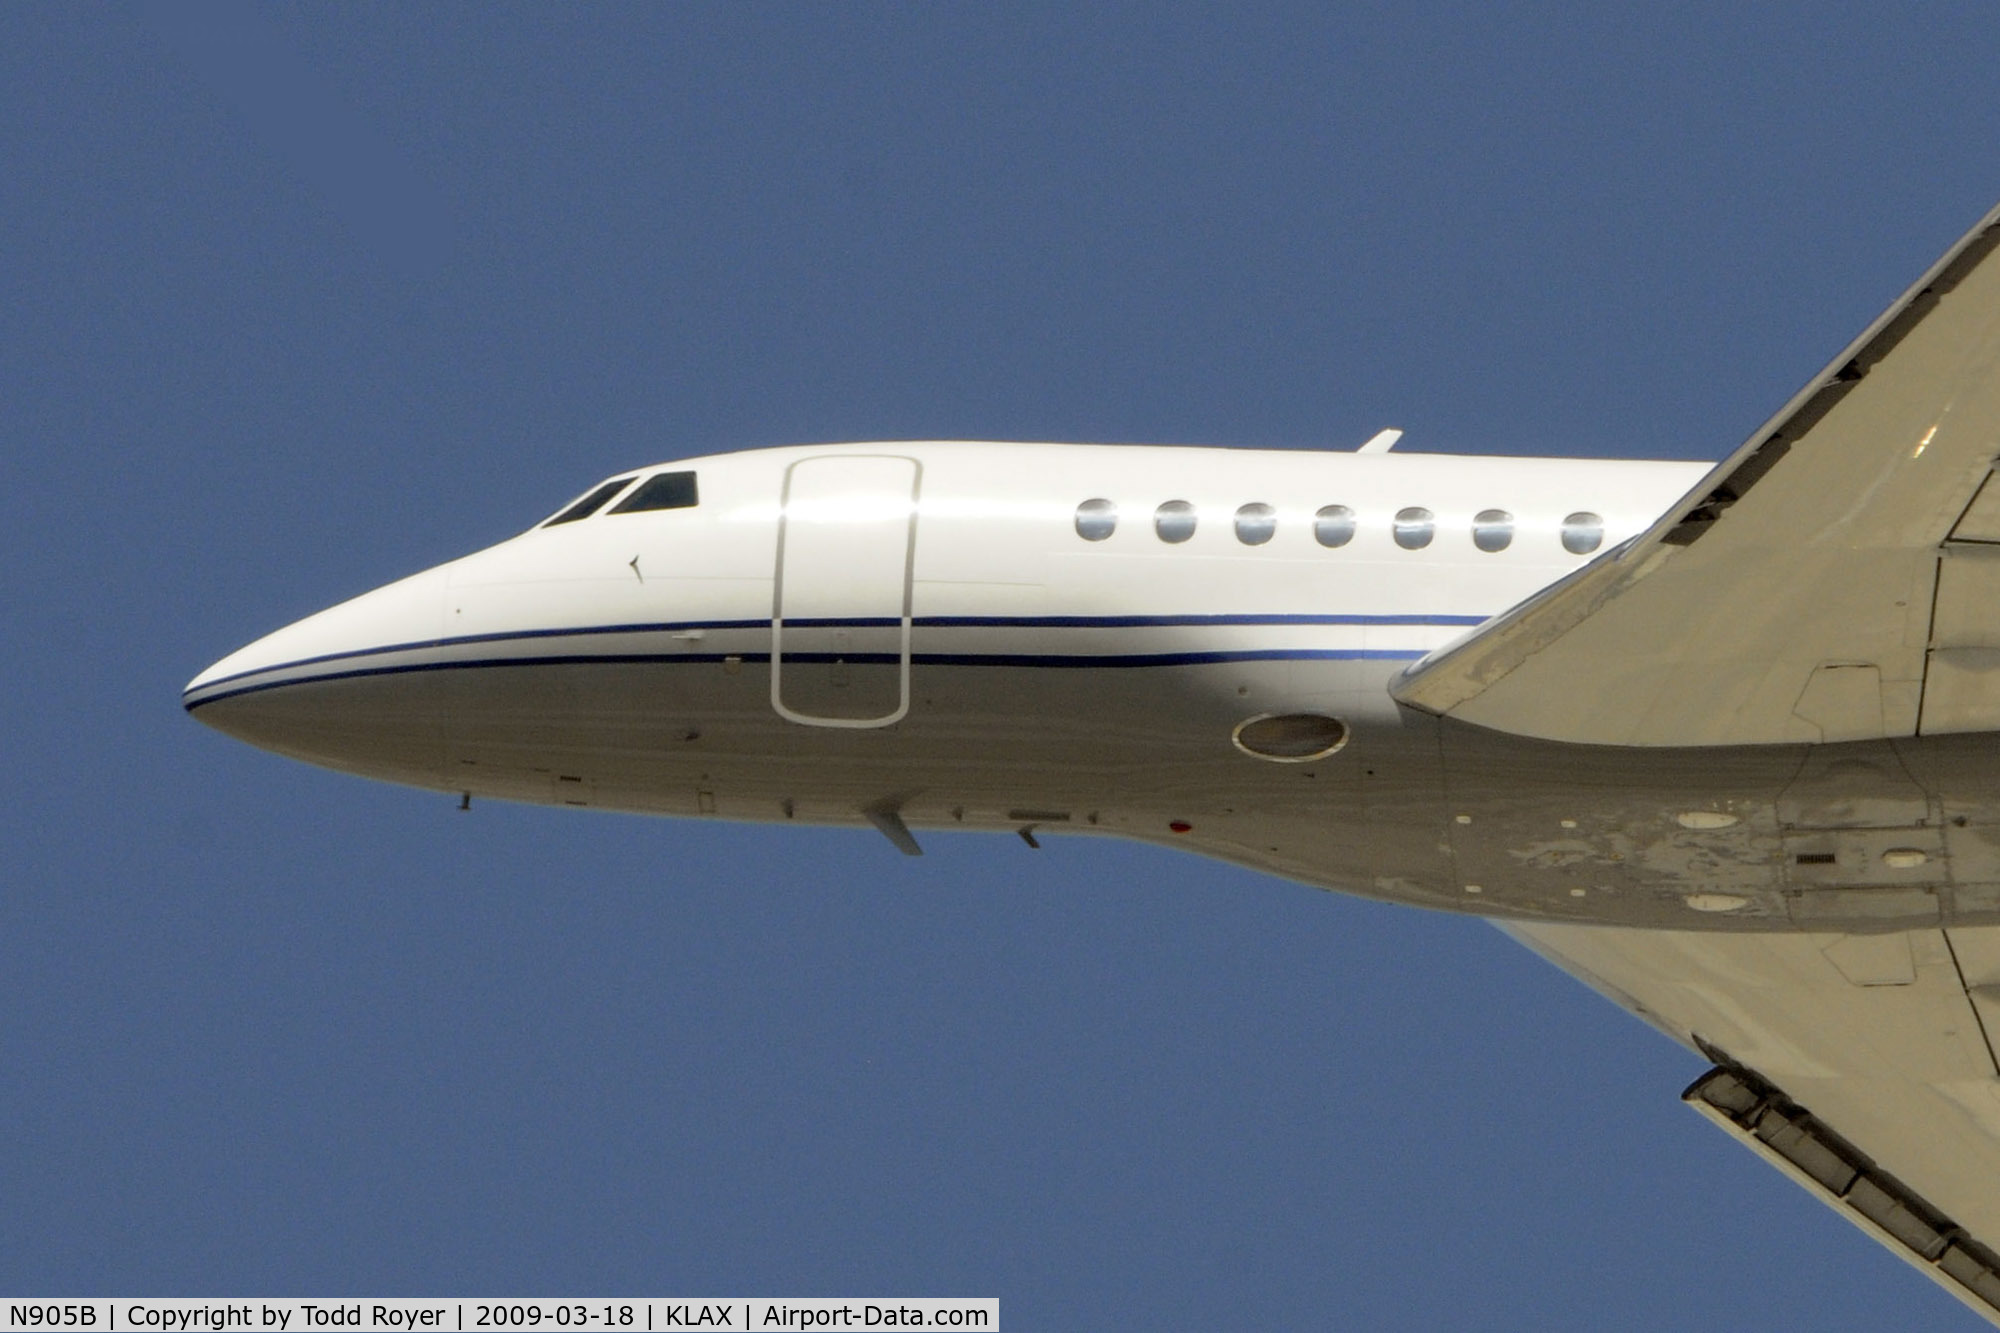 N905B, 2000 Dassault Falcon 2000 C/N 132, Departing LAX on 25L